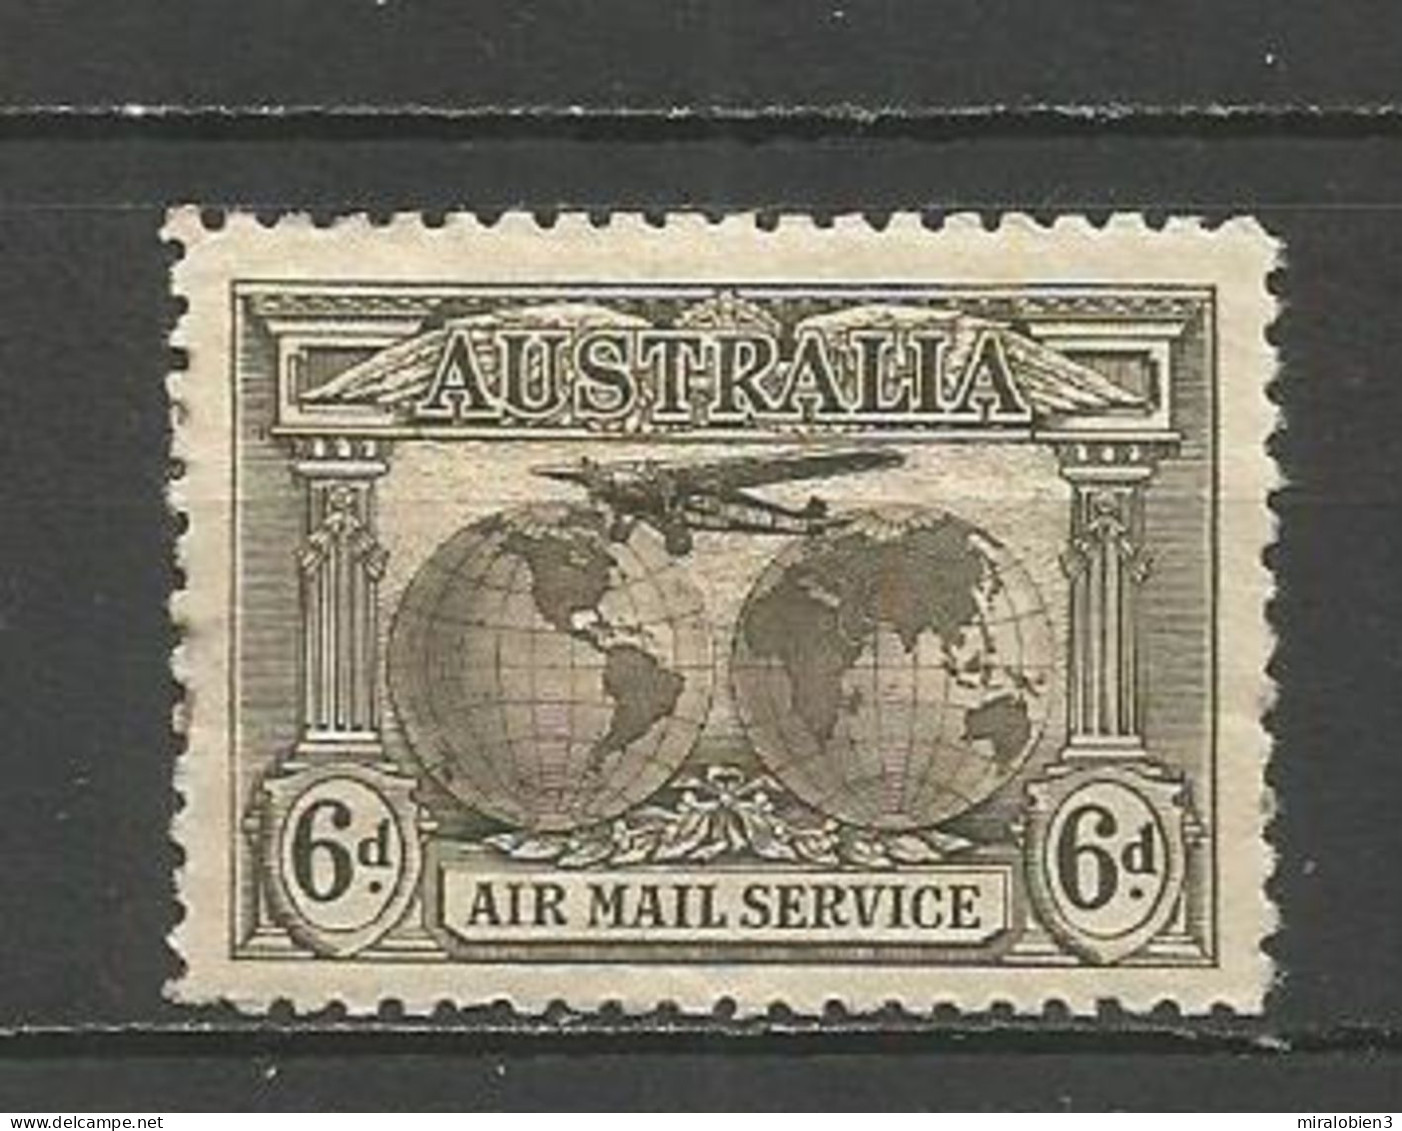 AUSTRALIA CORREO AEREO YVERT NUM. 4 * NUEVO CON FIJASELLOS - Mint Stamps